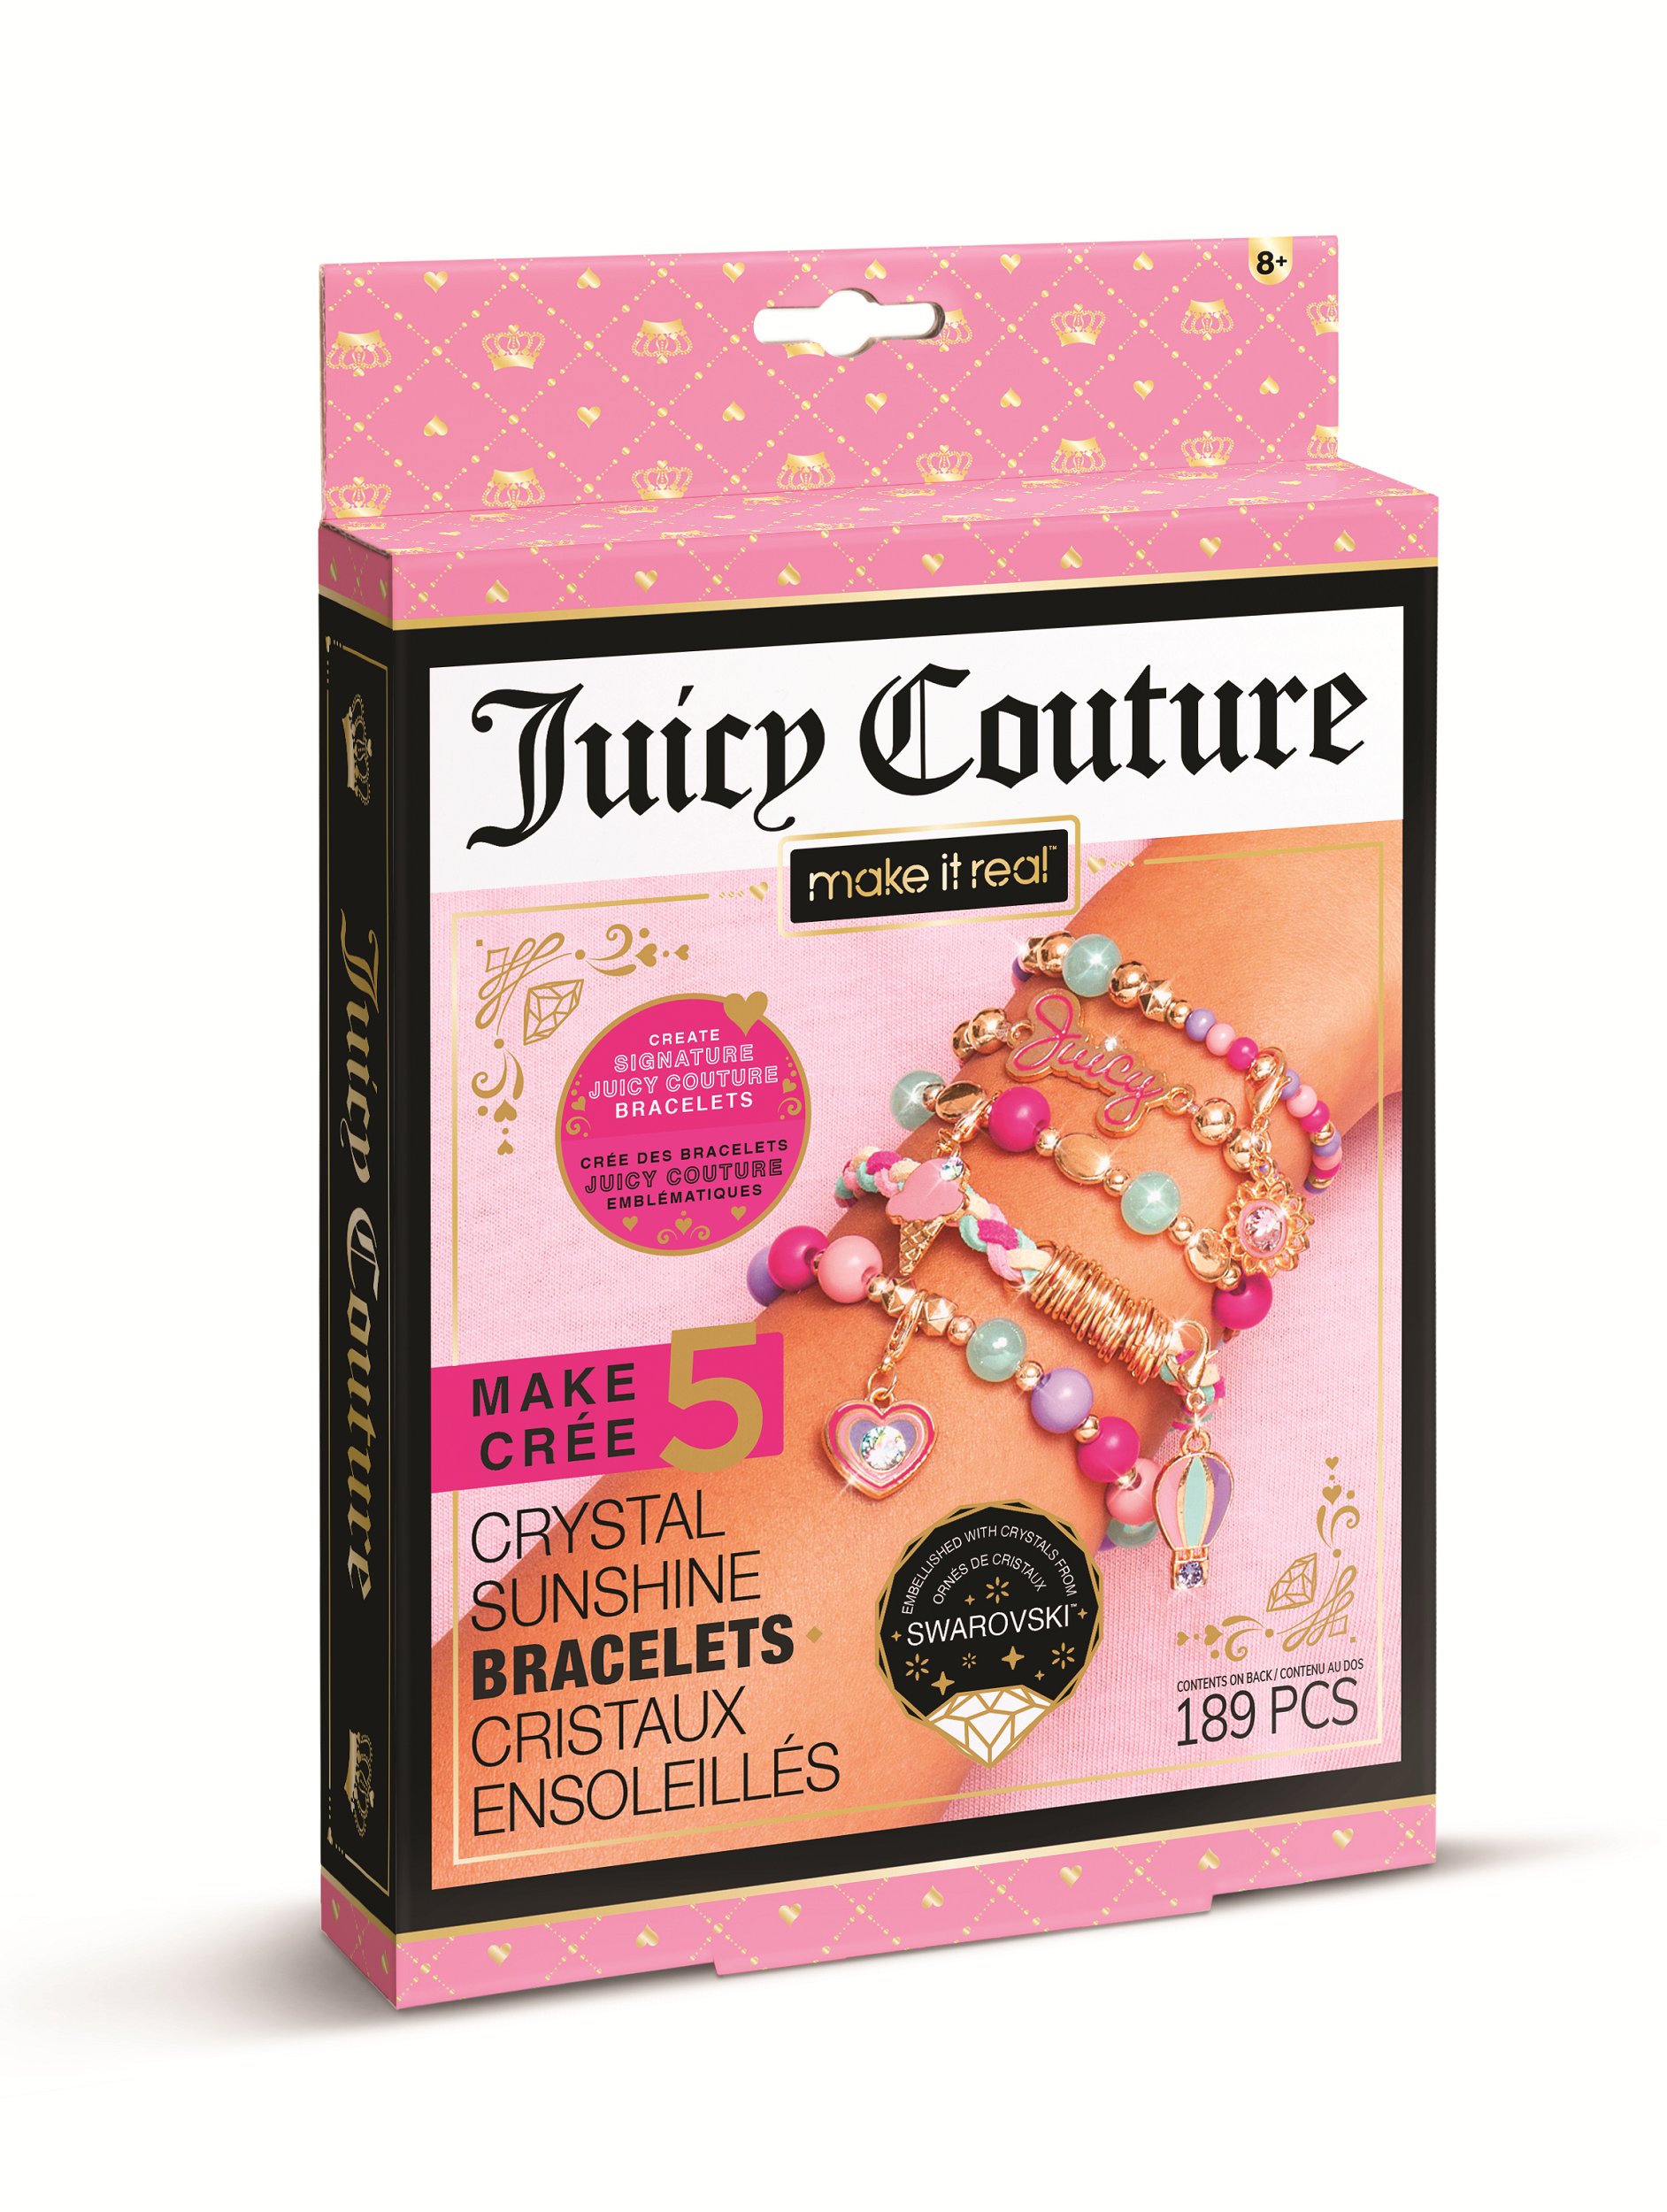 Make it Real - Juicy Couture Crystal Sunshine Bracelets With Swarovski ® (4433) - Make it Real